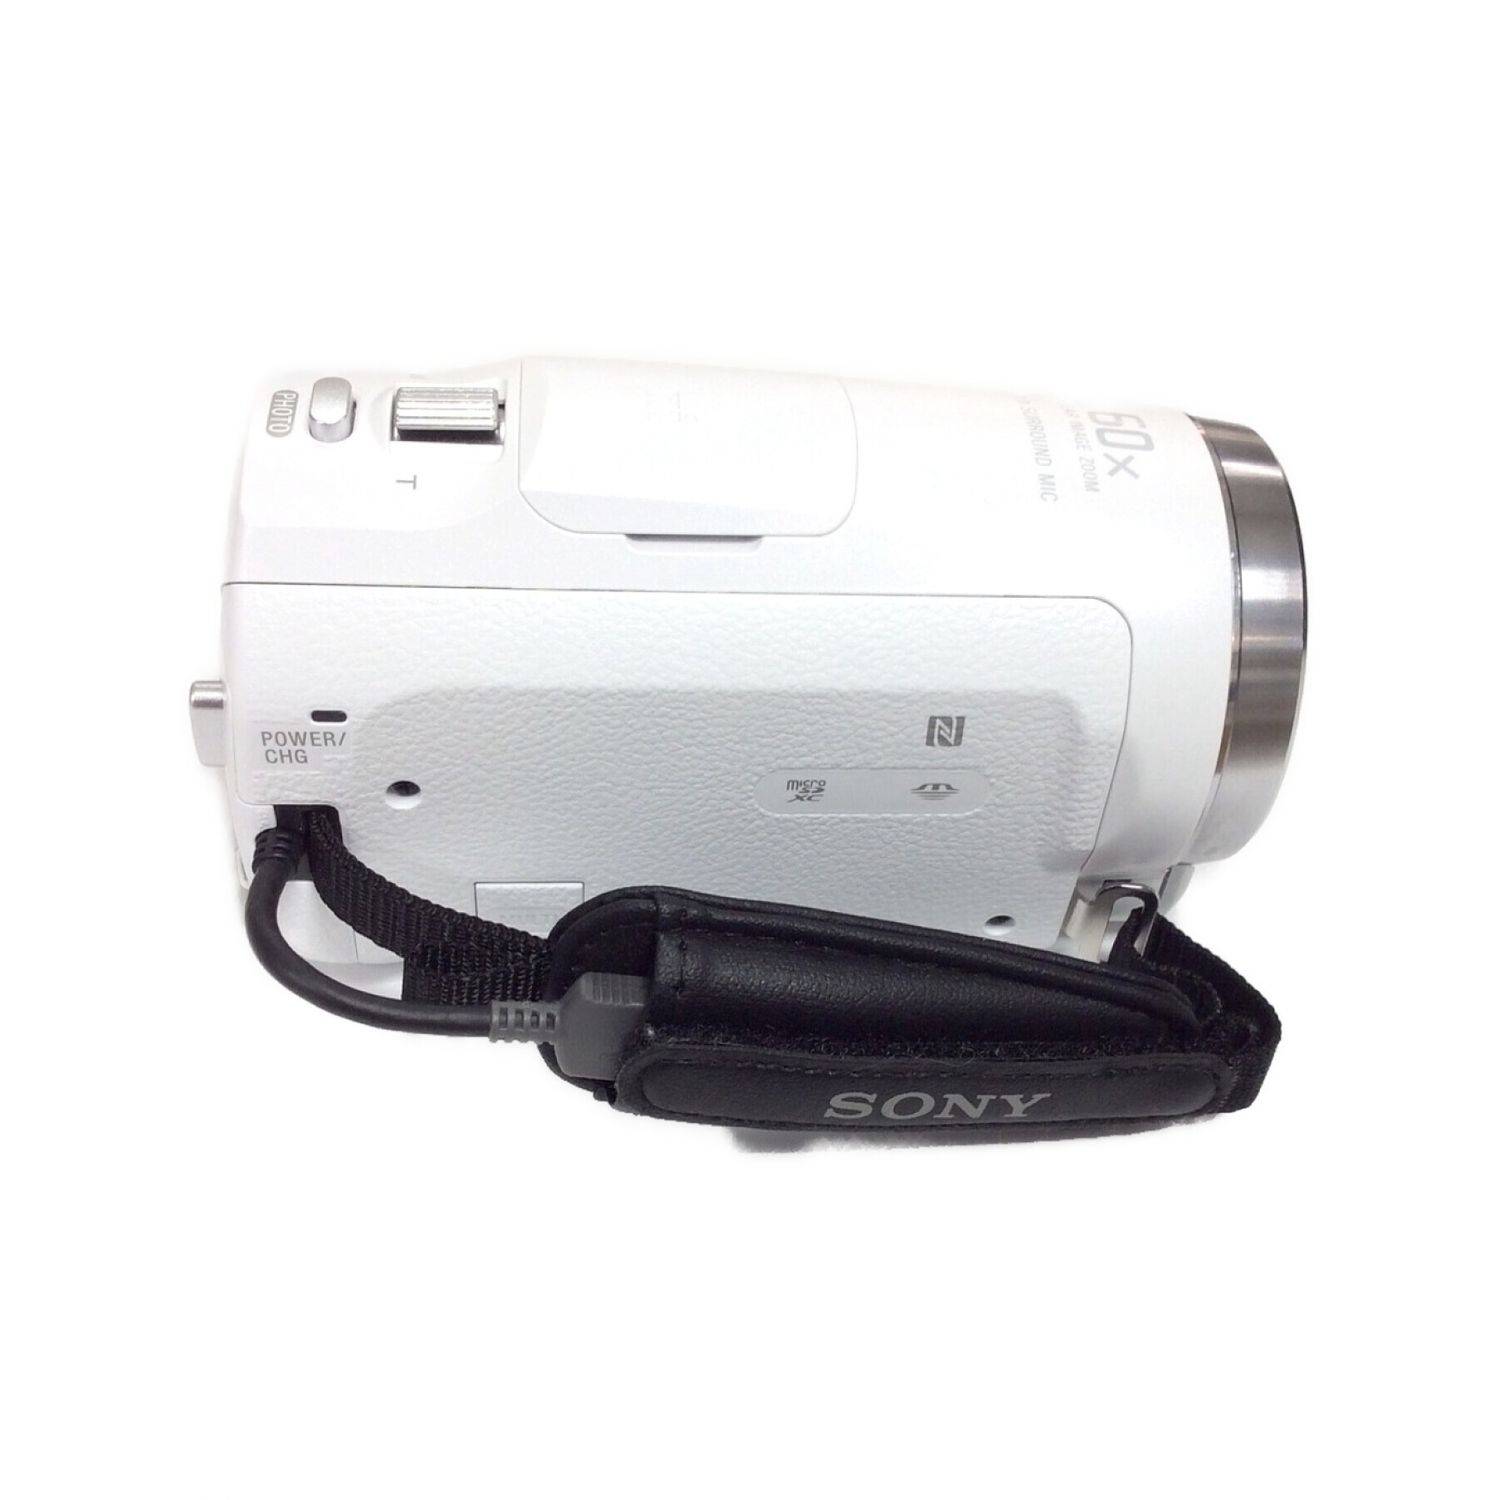 SONY (ソニー) デジタルHDビデオカメラレコーダー HDR-CX680 